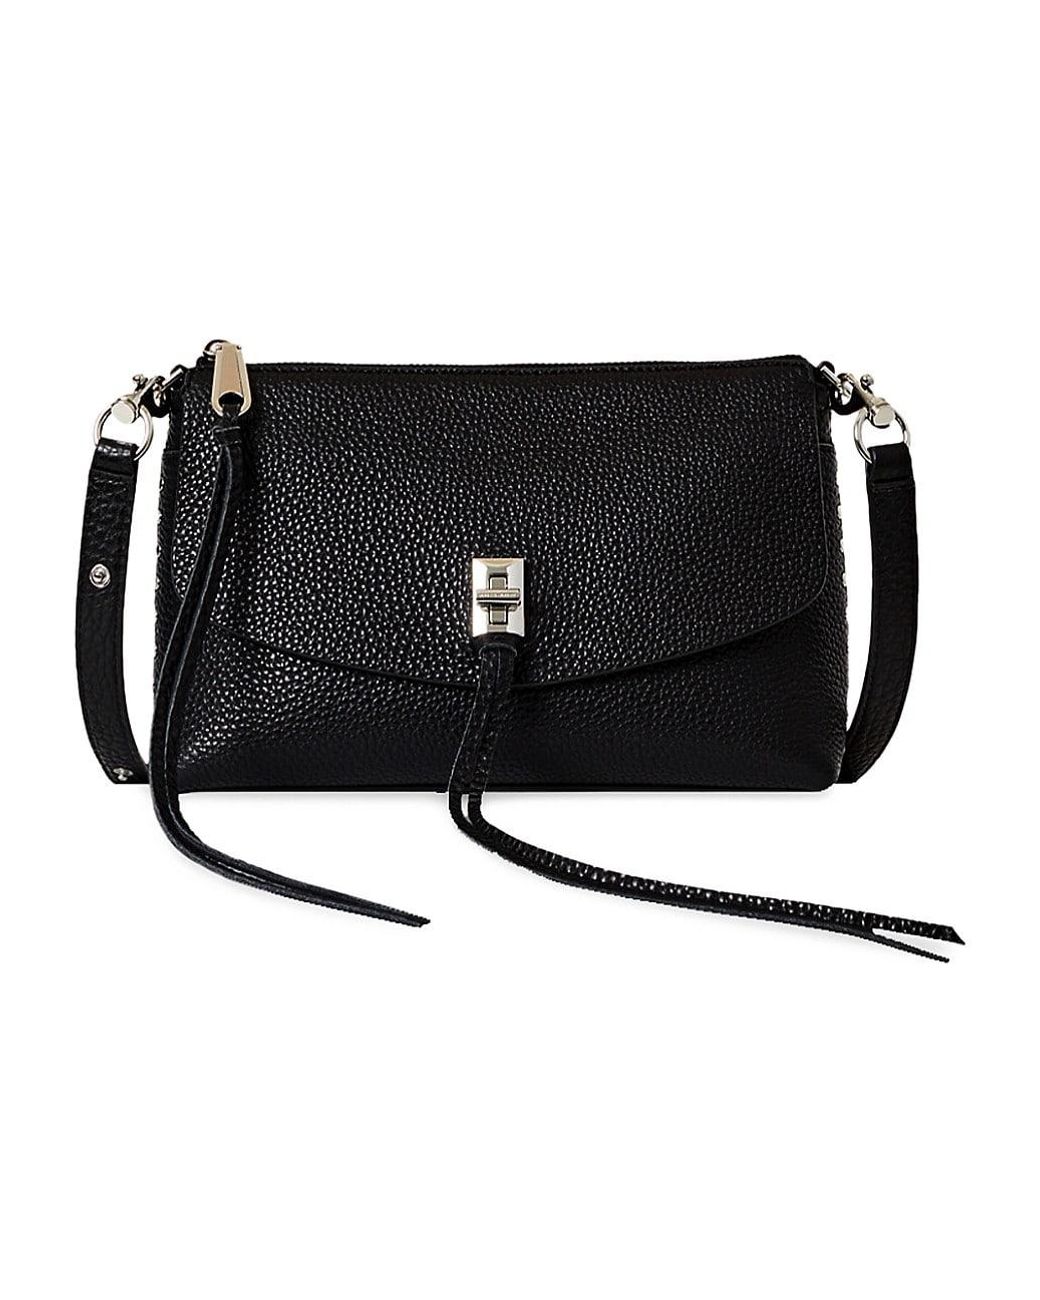 Rebecca Minkoff Darren Top Zip Leather Crossbody Bag in Black - Lyst